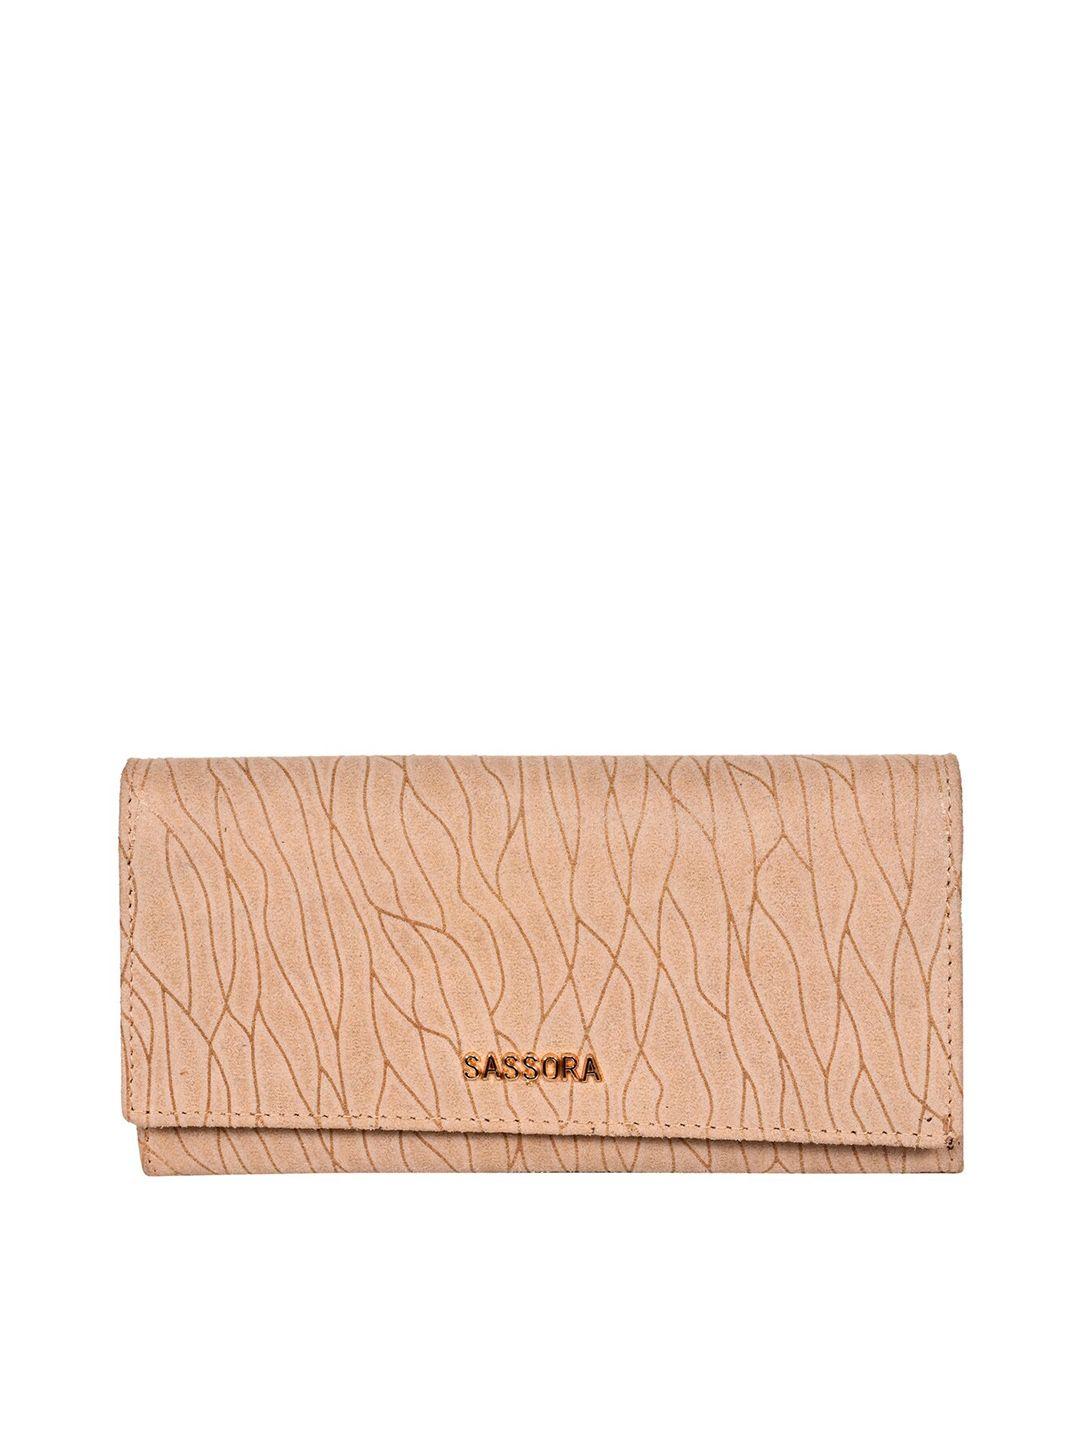 sassora women brown abstract printed leather envelope